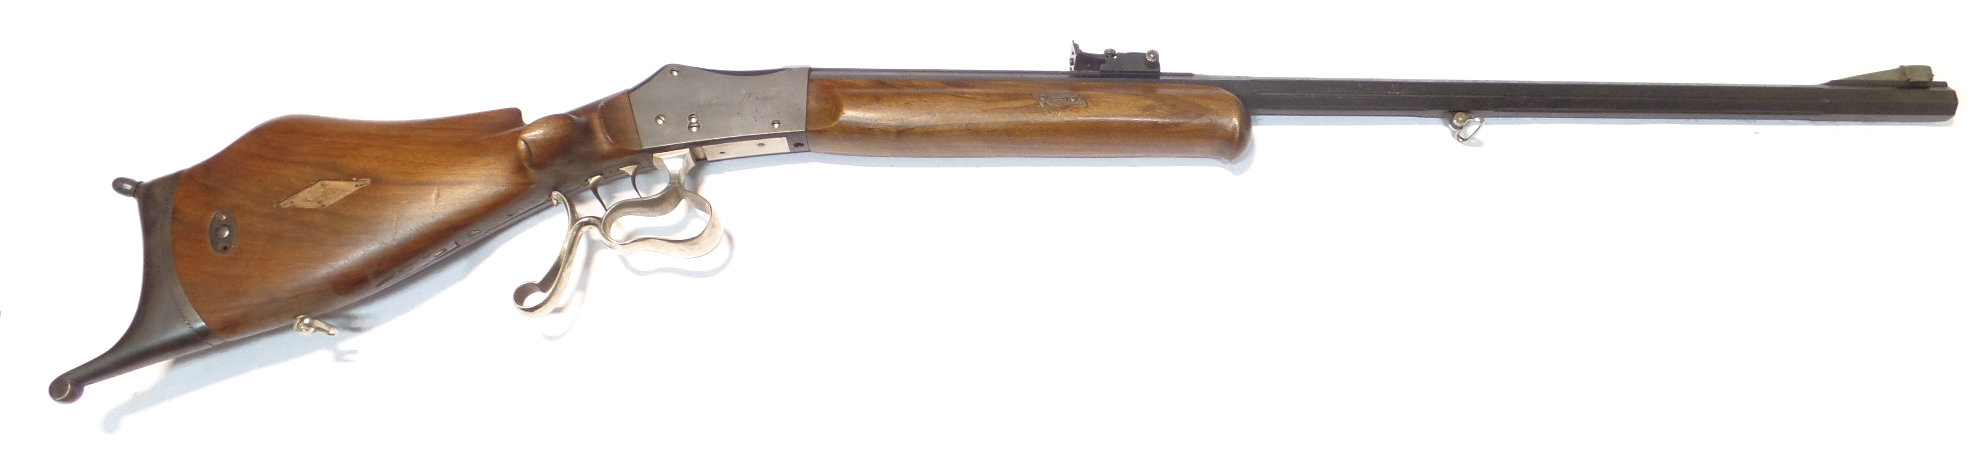 Carabine Match type Martini calibre 7.5x55 GP11